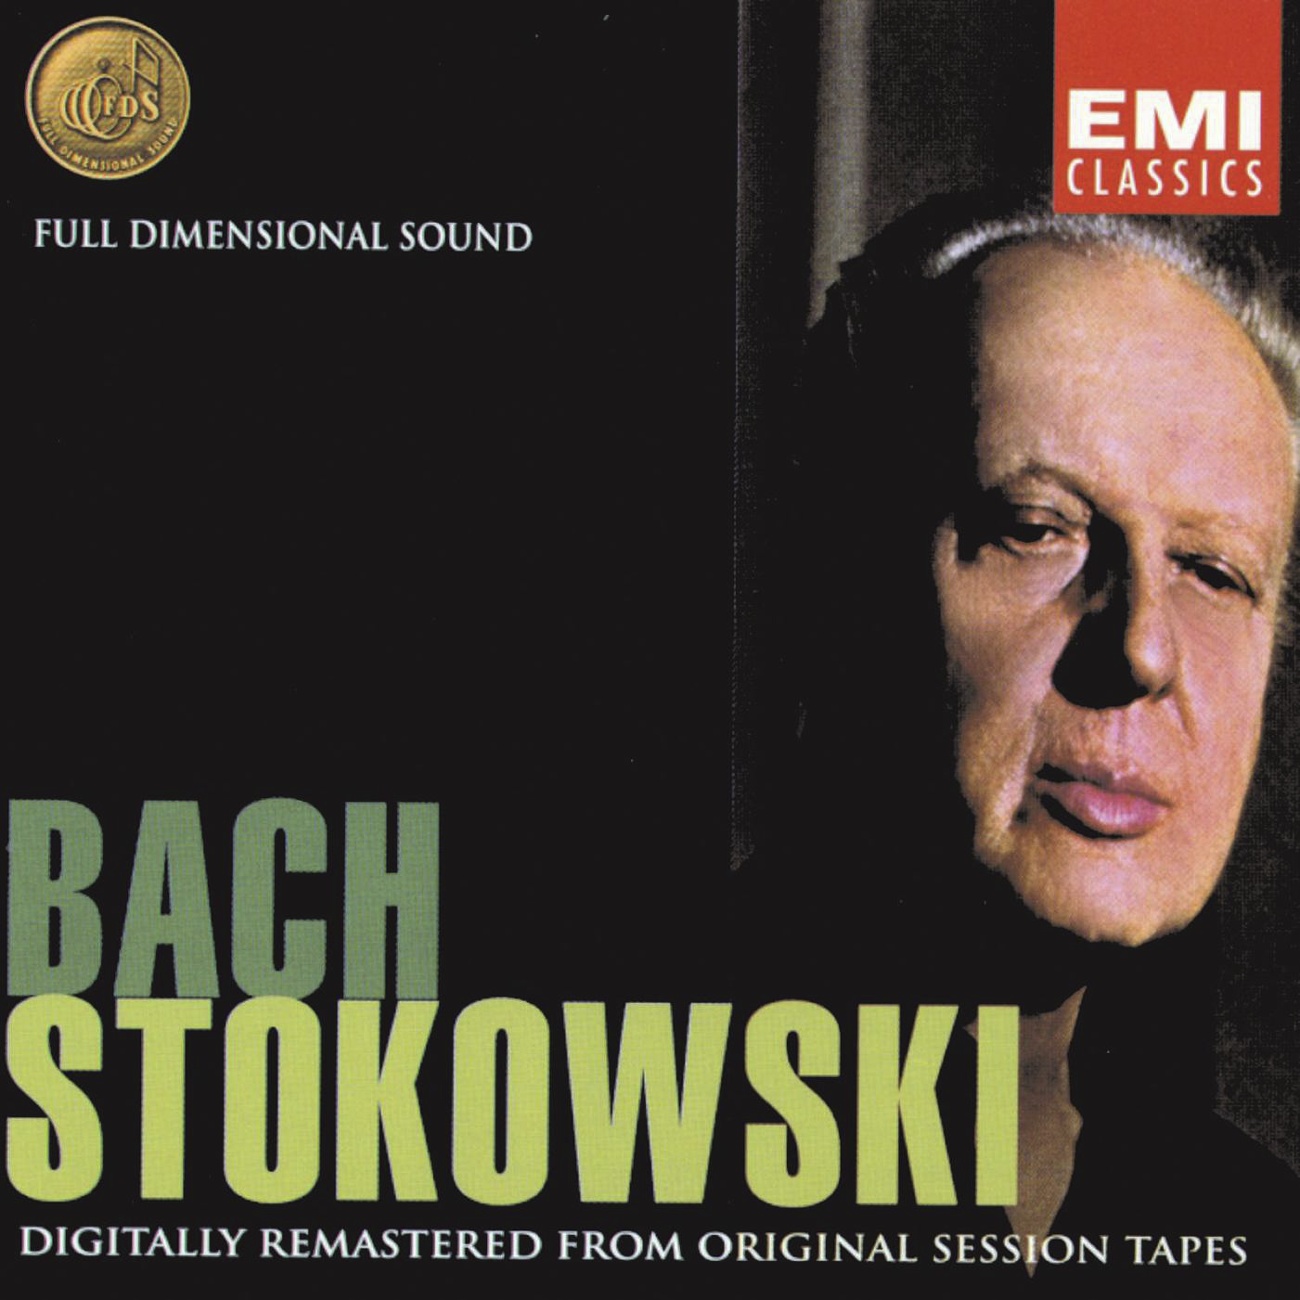 Violin Partita No. 1 in B minor BWV1002 (arr. Stokowski) (1997 Digital Remaster): Sarabande